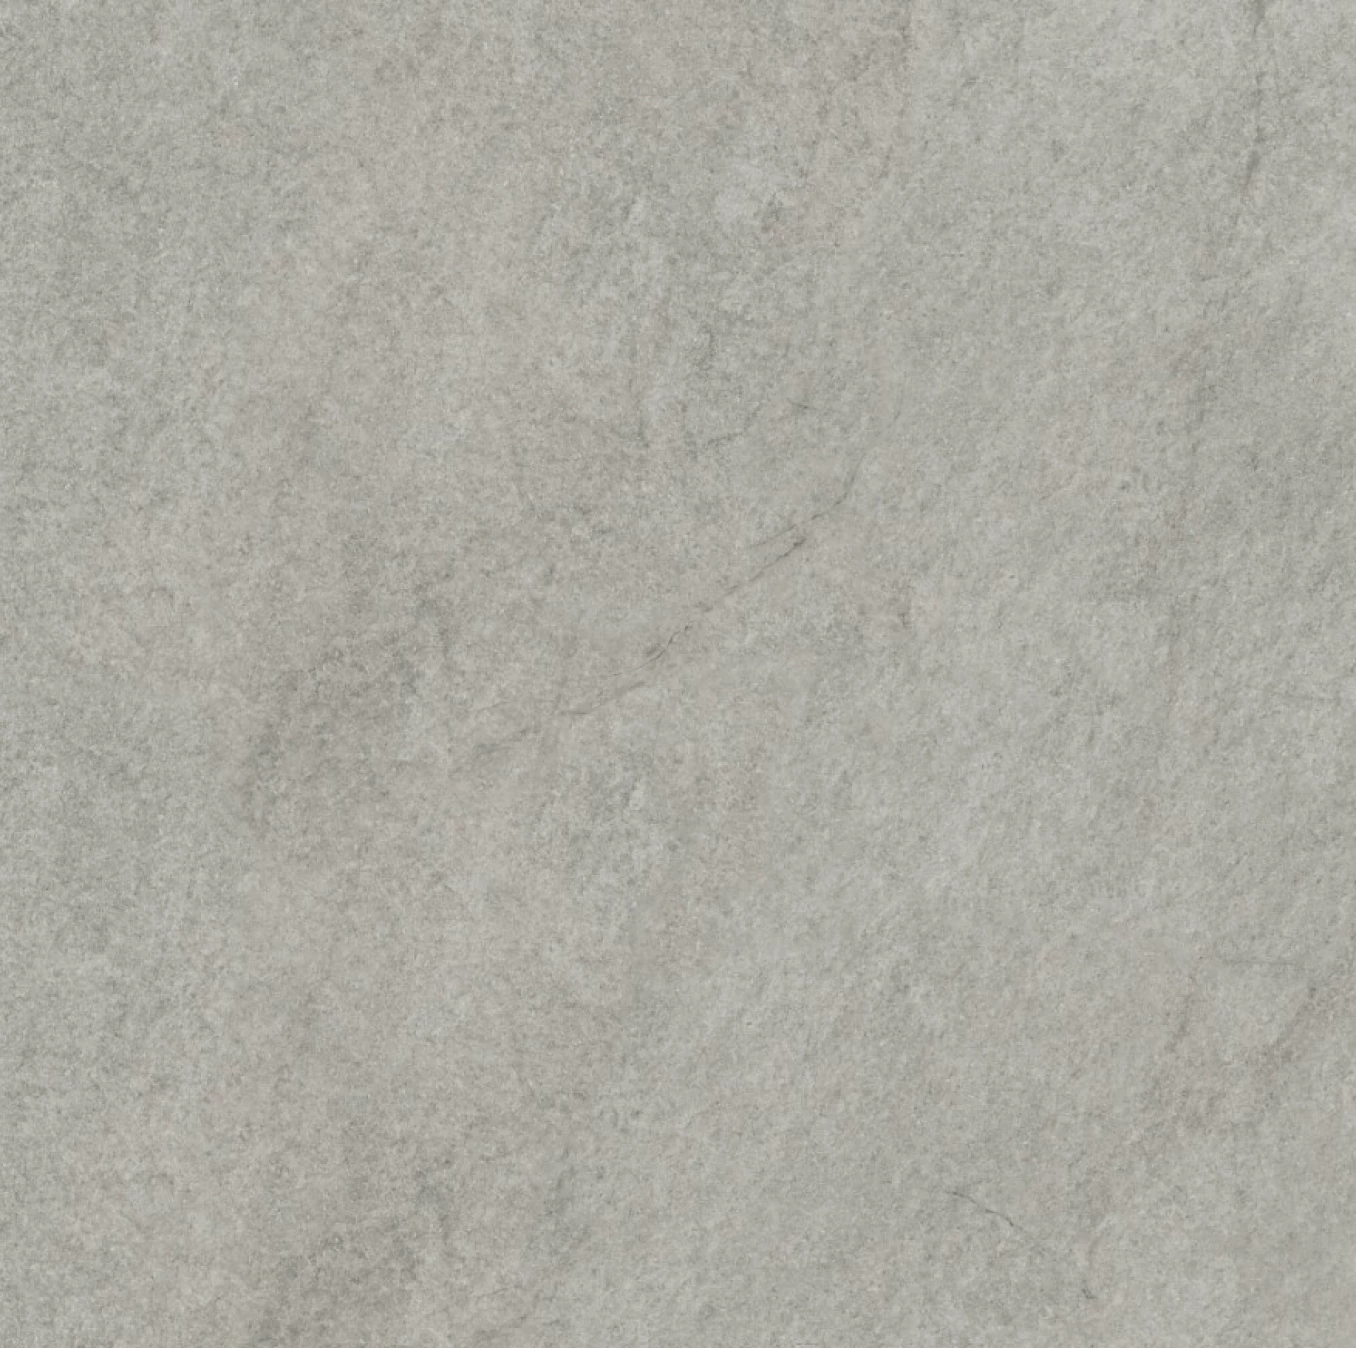 PIETRA SERENA grey 60x60 (20mm) rett KR 044 (P)